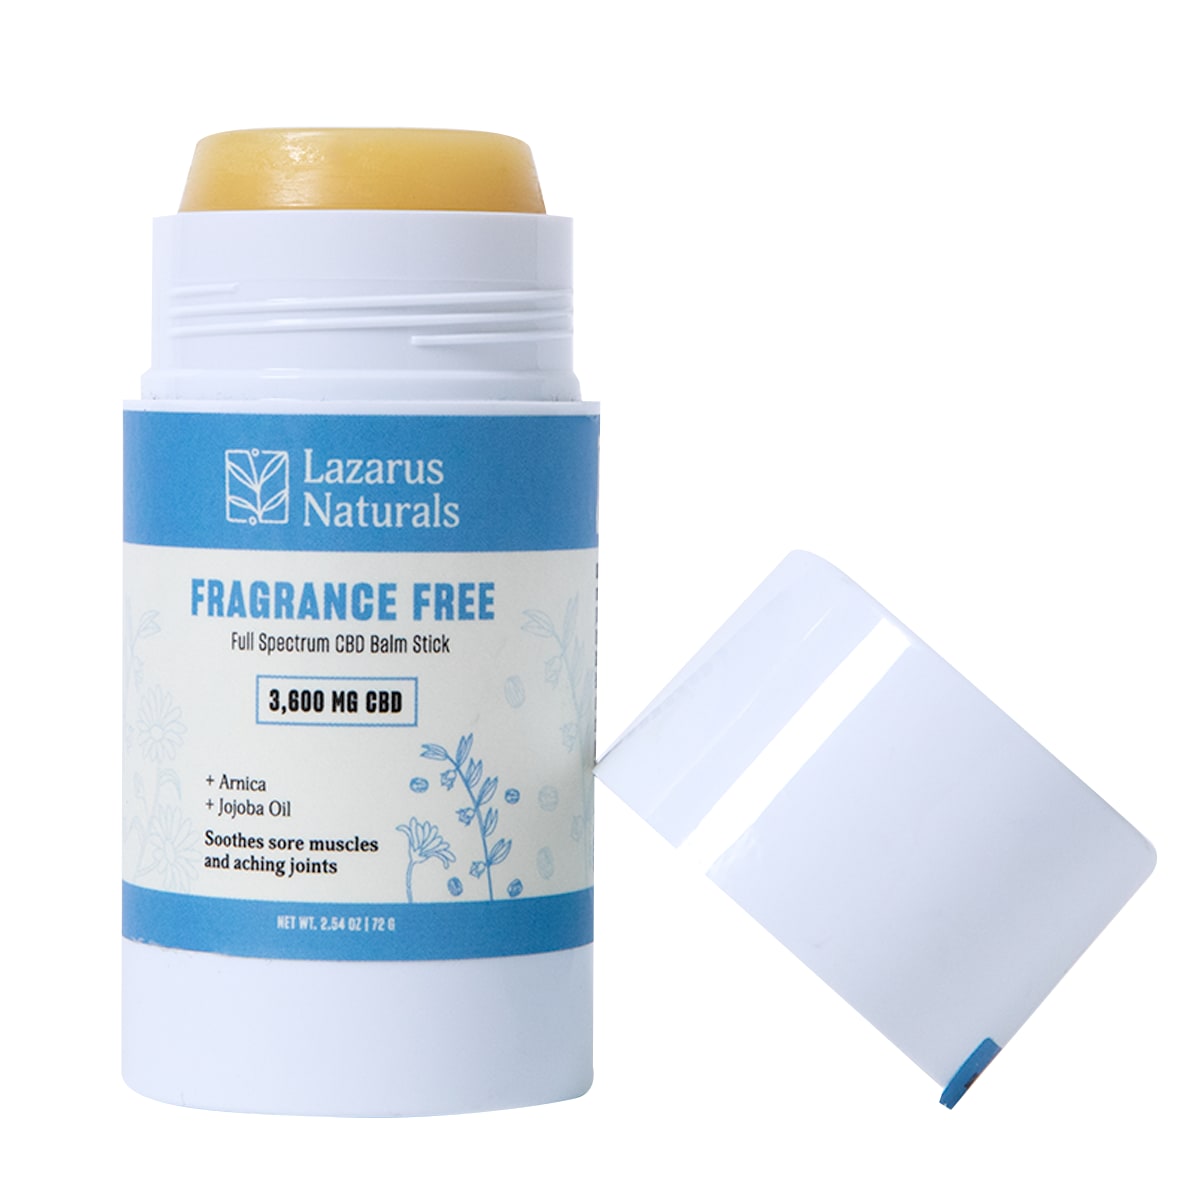 Lazarus Naturals, Fragrance Free CBD Balm Stick, Beeswax + Jojoba, Full Spectrum, 2.54oz, 3600mg CBD